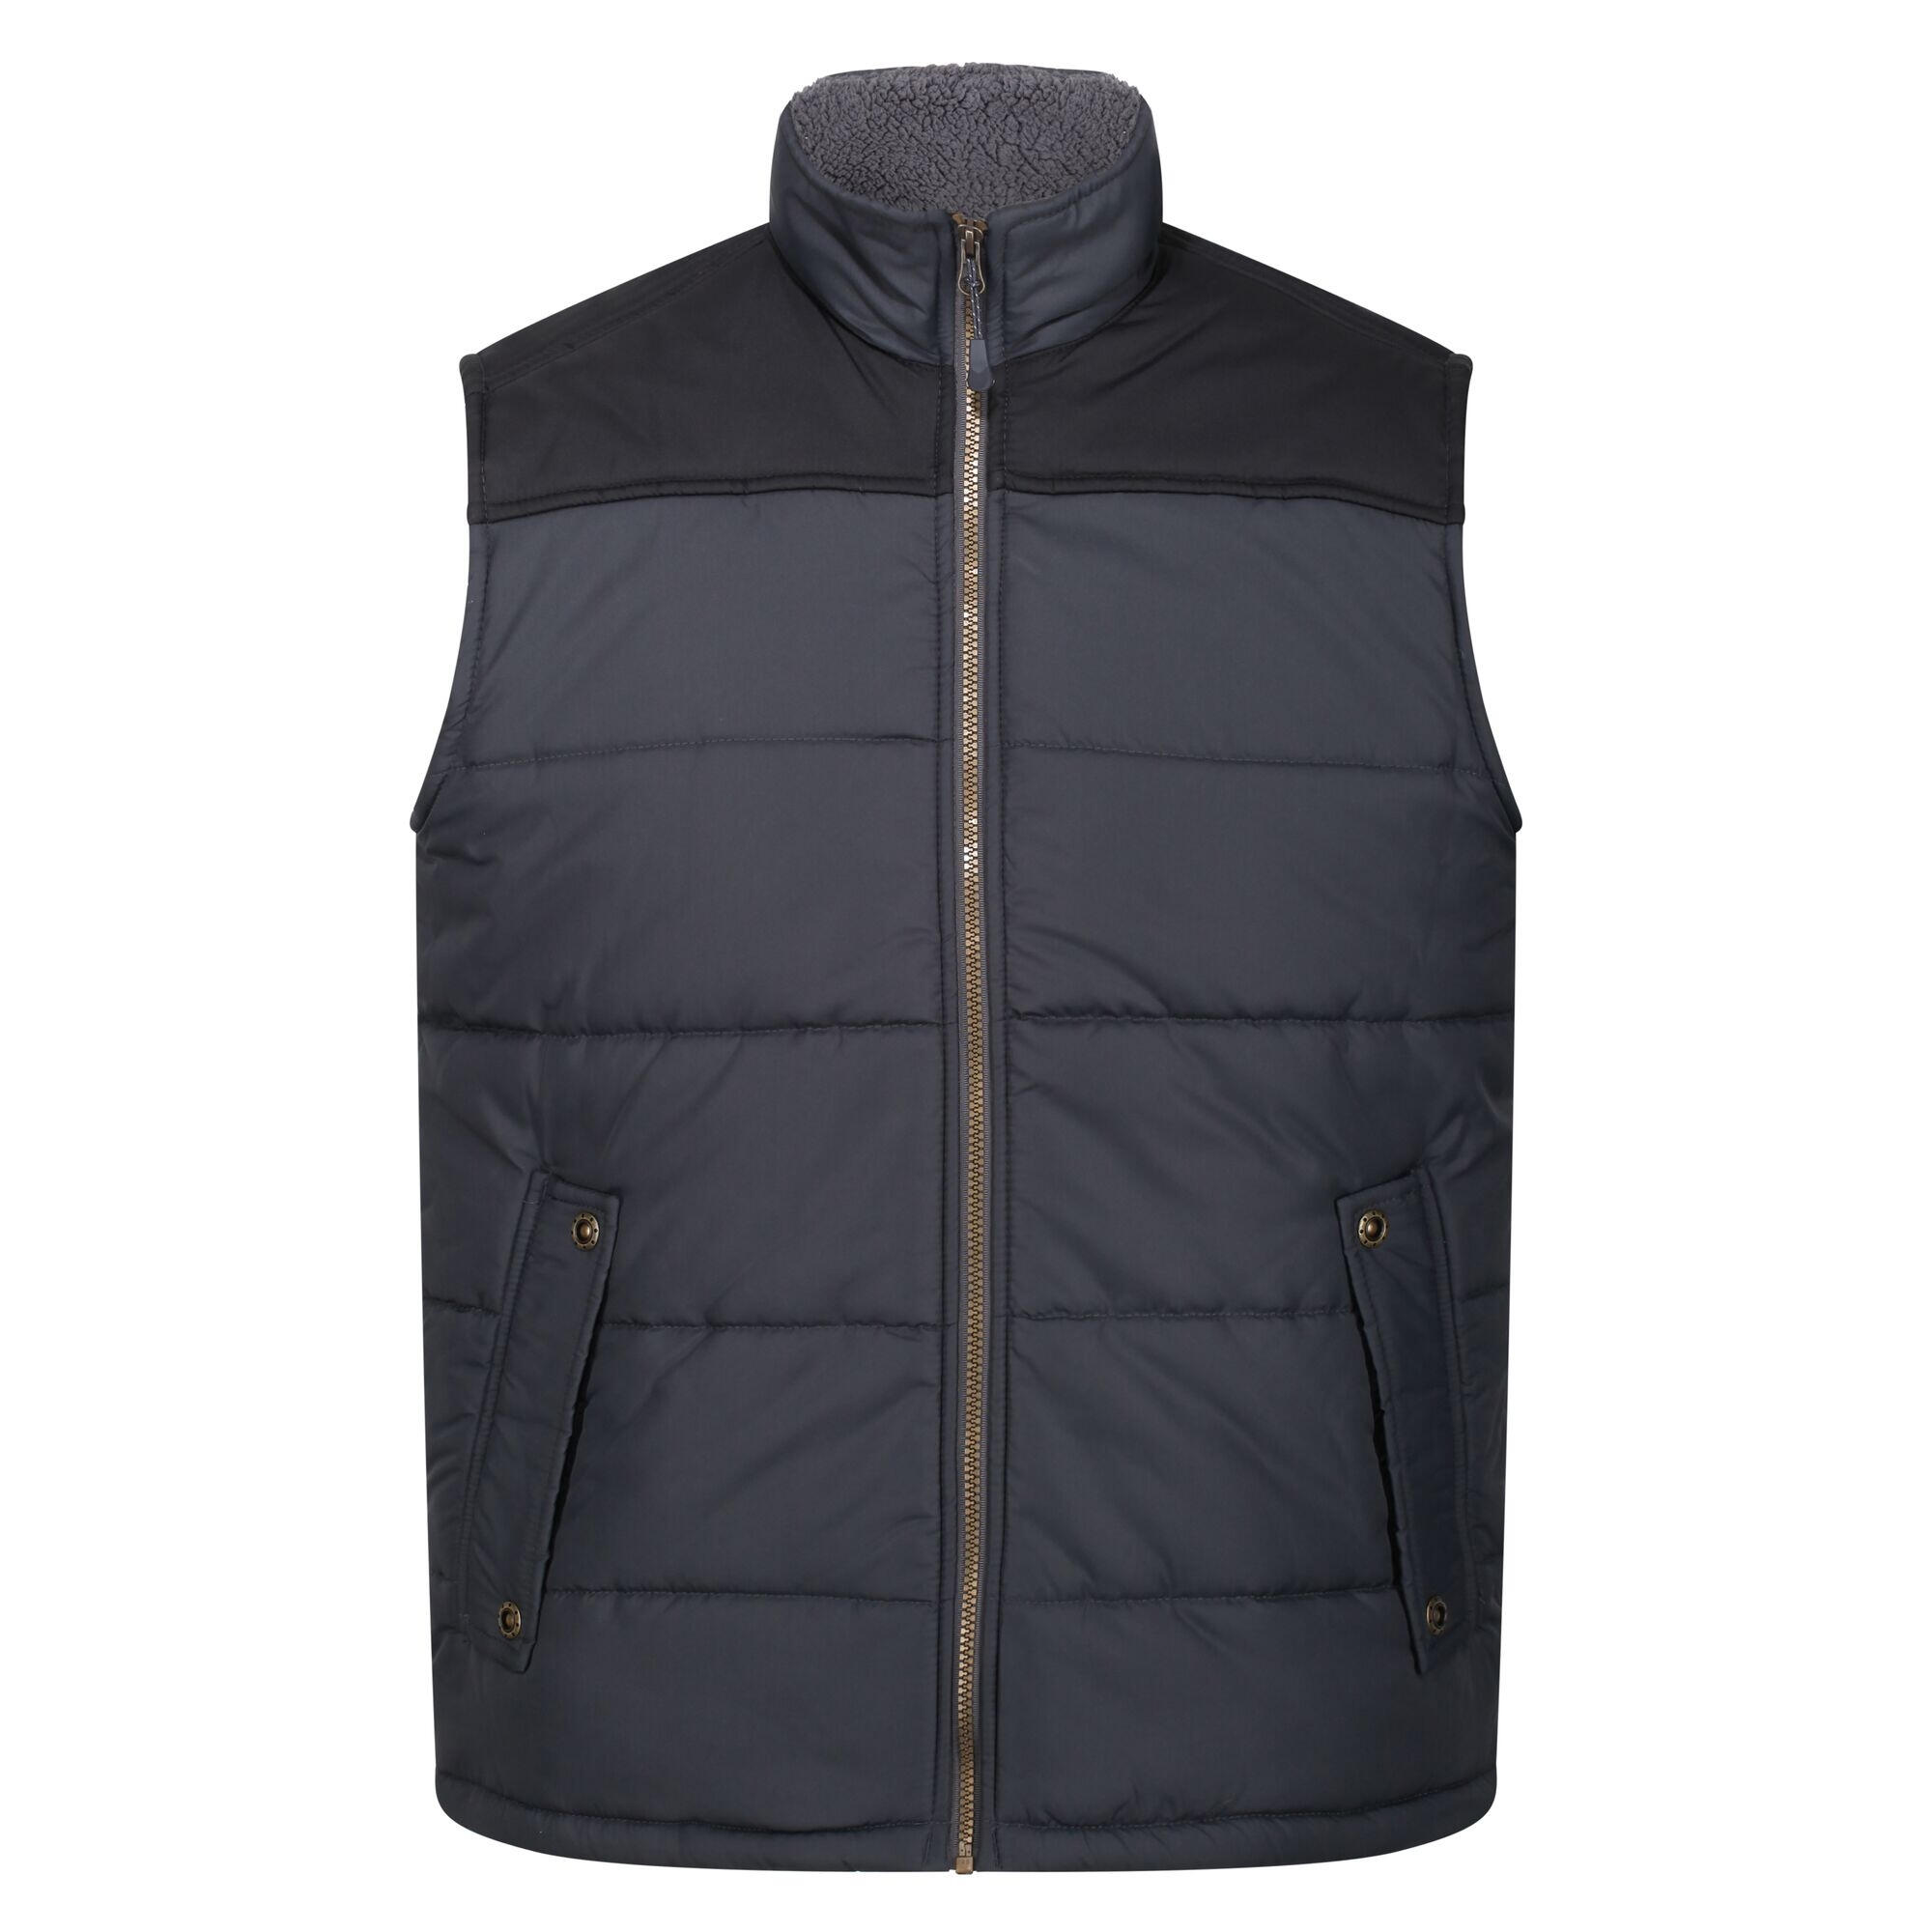 Mens Standout Altoona Insulated Bodywarmer Jacket (Seal Grey/Black) 1/4